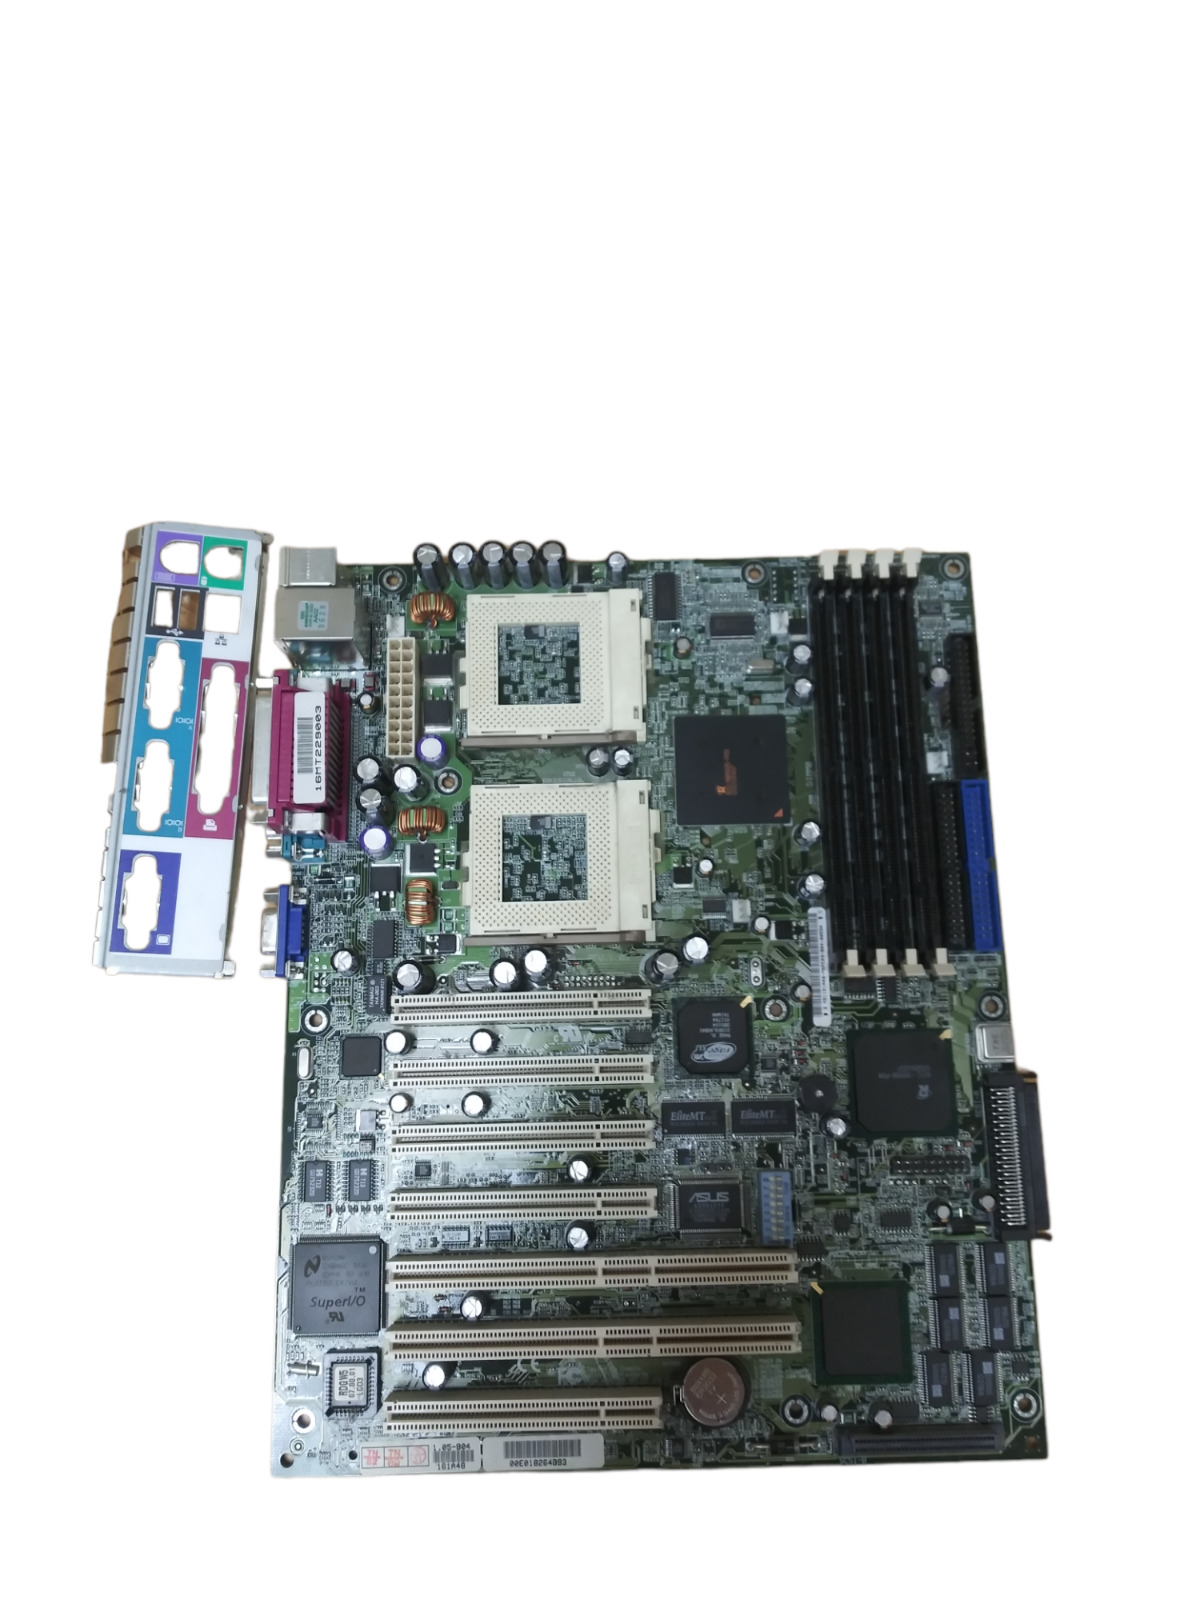 CUR-DLS Dual Socket 370 Motherboard W/ IO Shield tested good